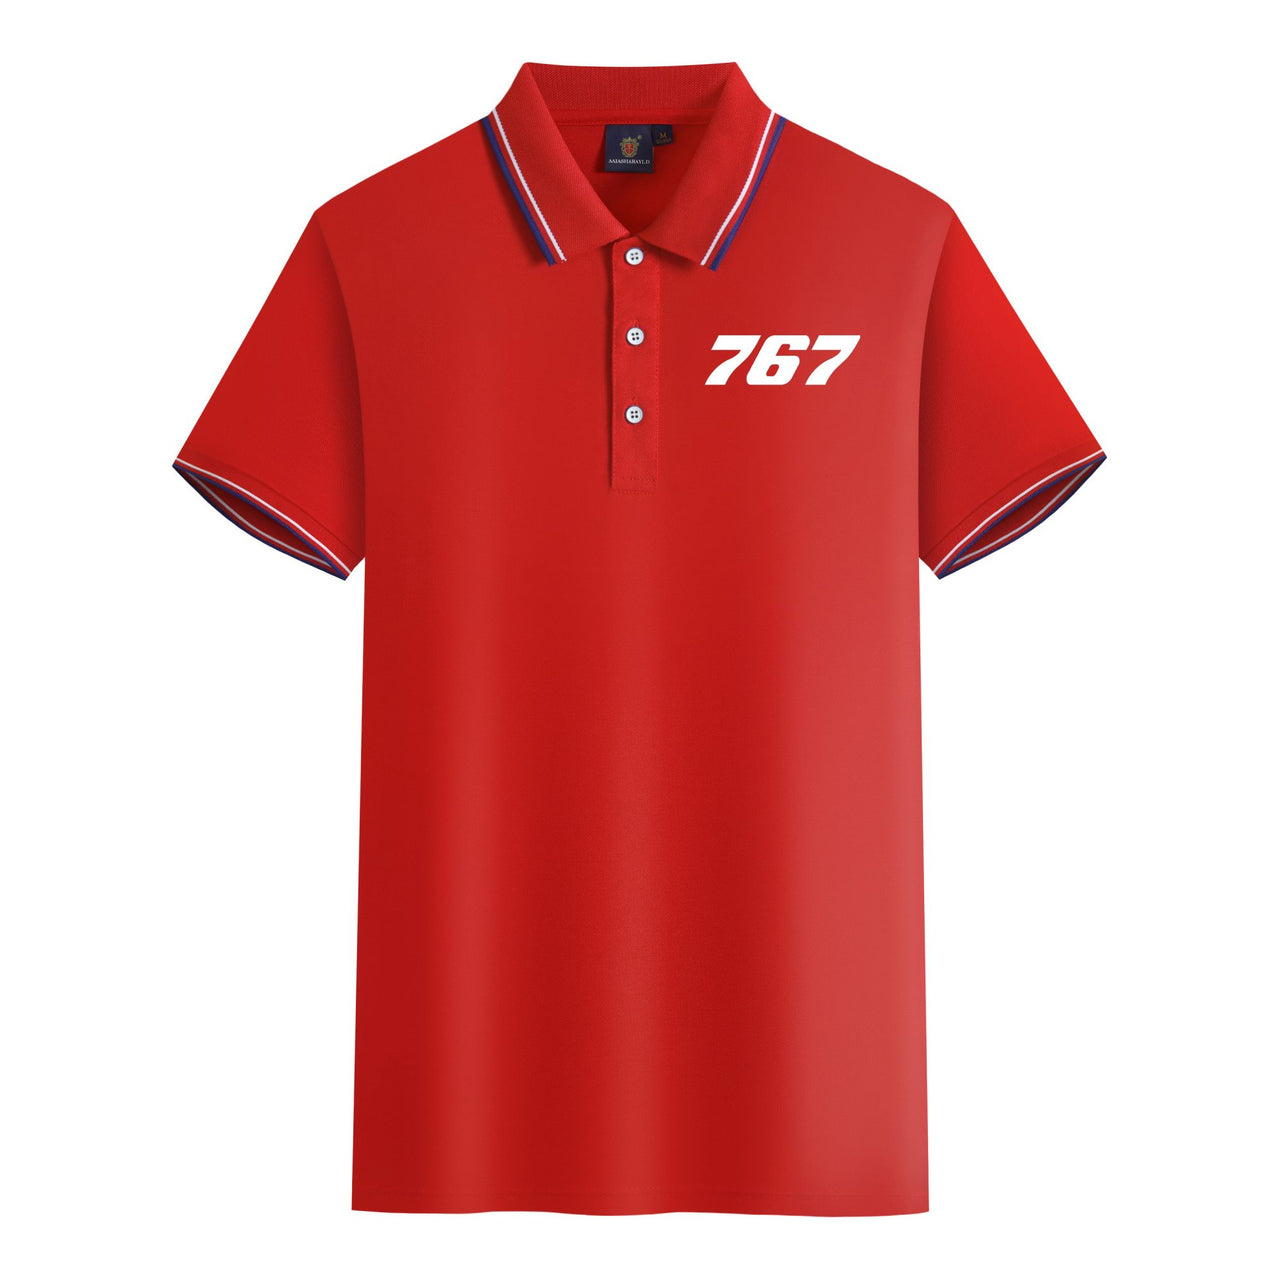 767 Flat Text Designed Stylish Polo T-Shirts